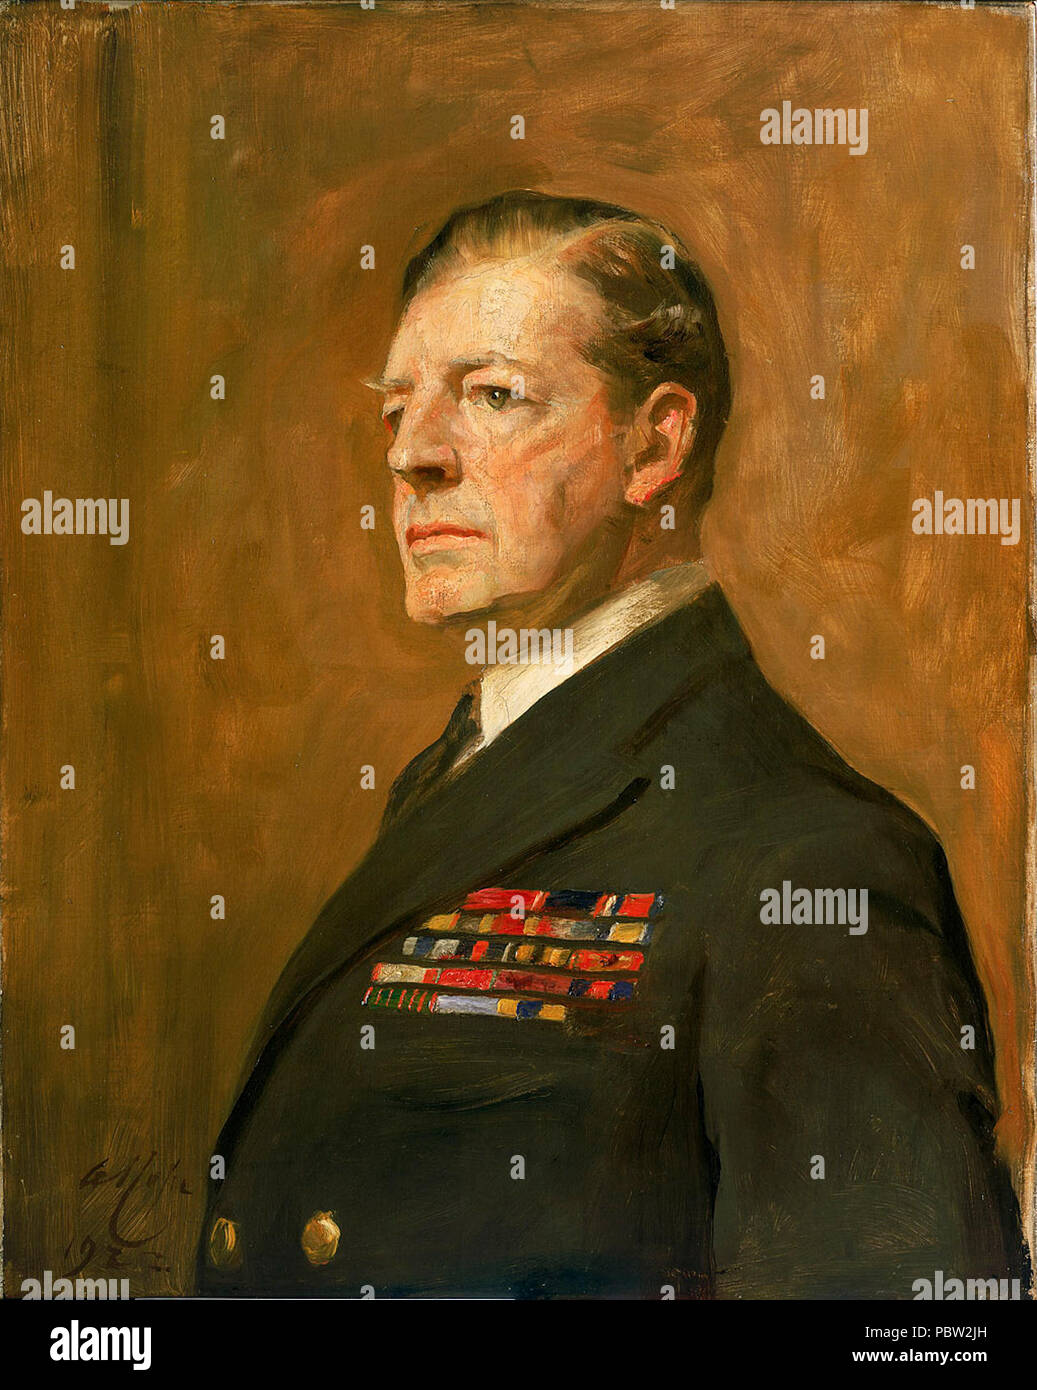 Admiral of the Fleet Sir David Beatty, 1st Earl Beatty. Stock Photo